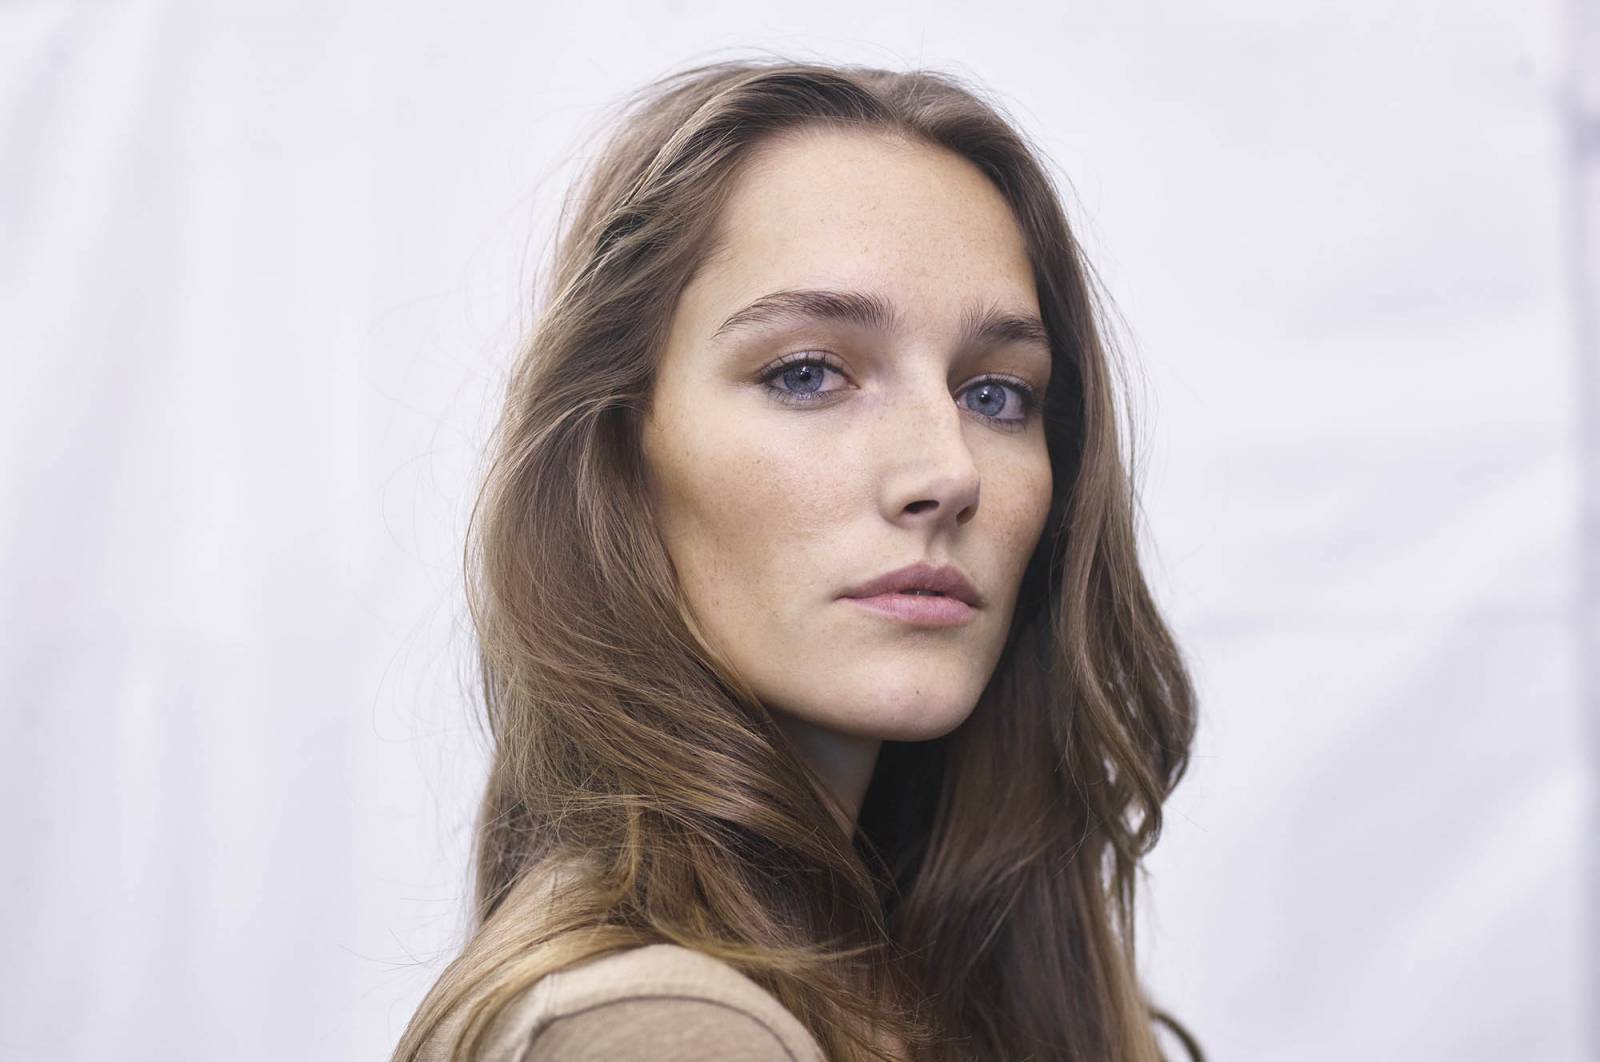 Modelka za kulisami pokazu Isabel Marant (Fot. Getty Images)